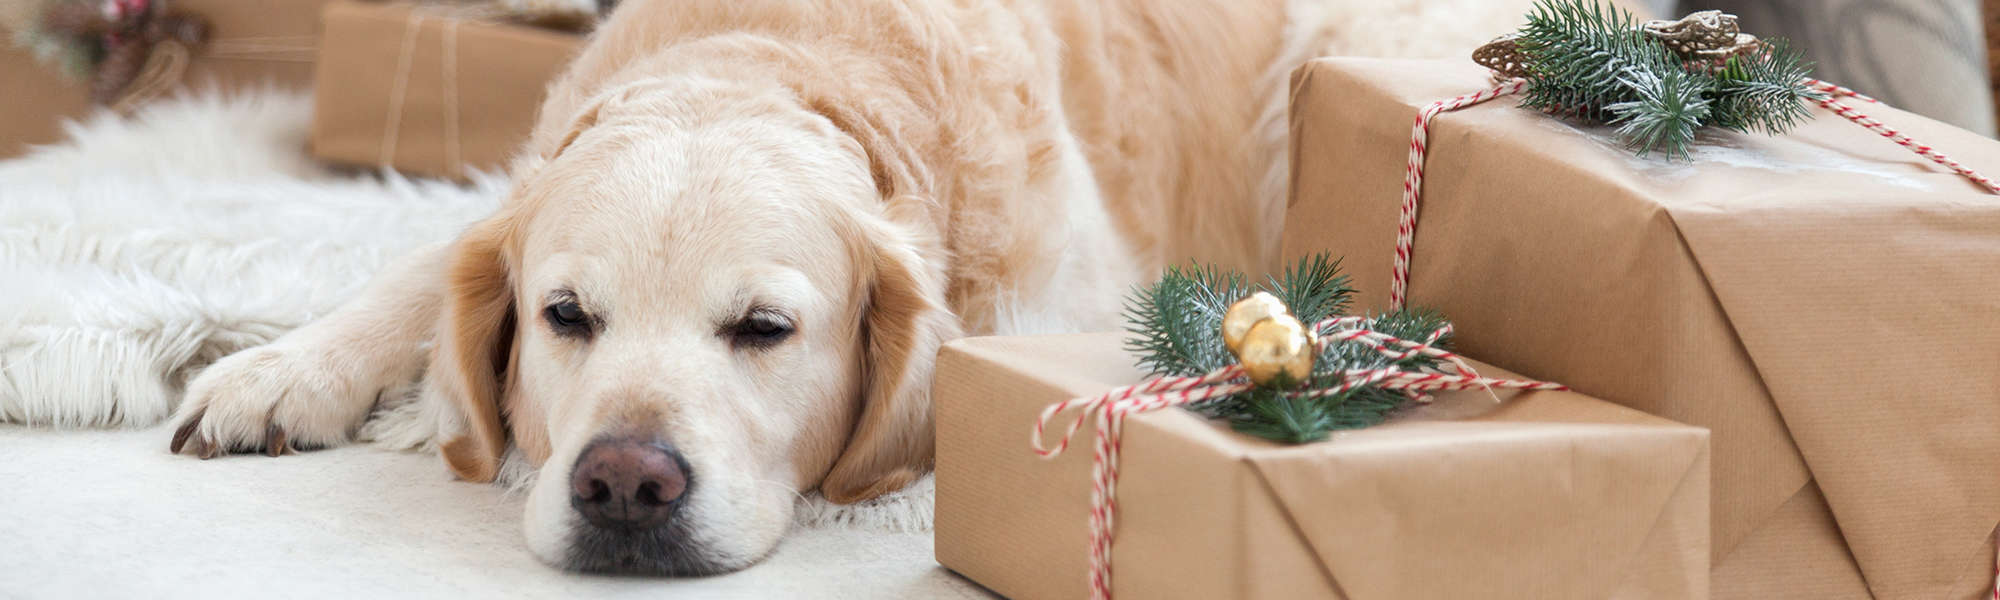 Holiday Season Pet Care Tips